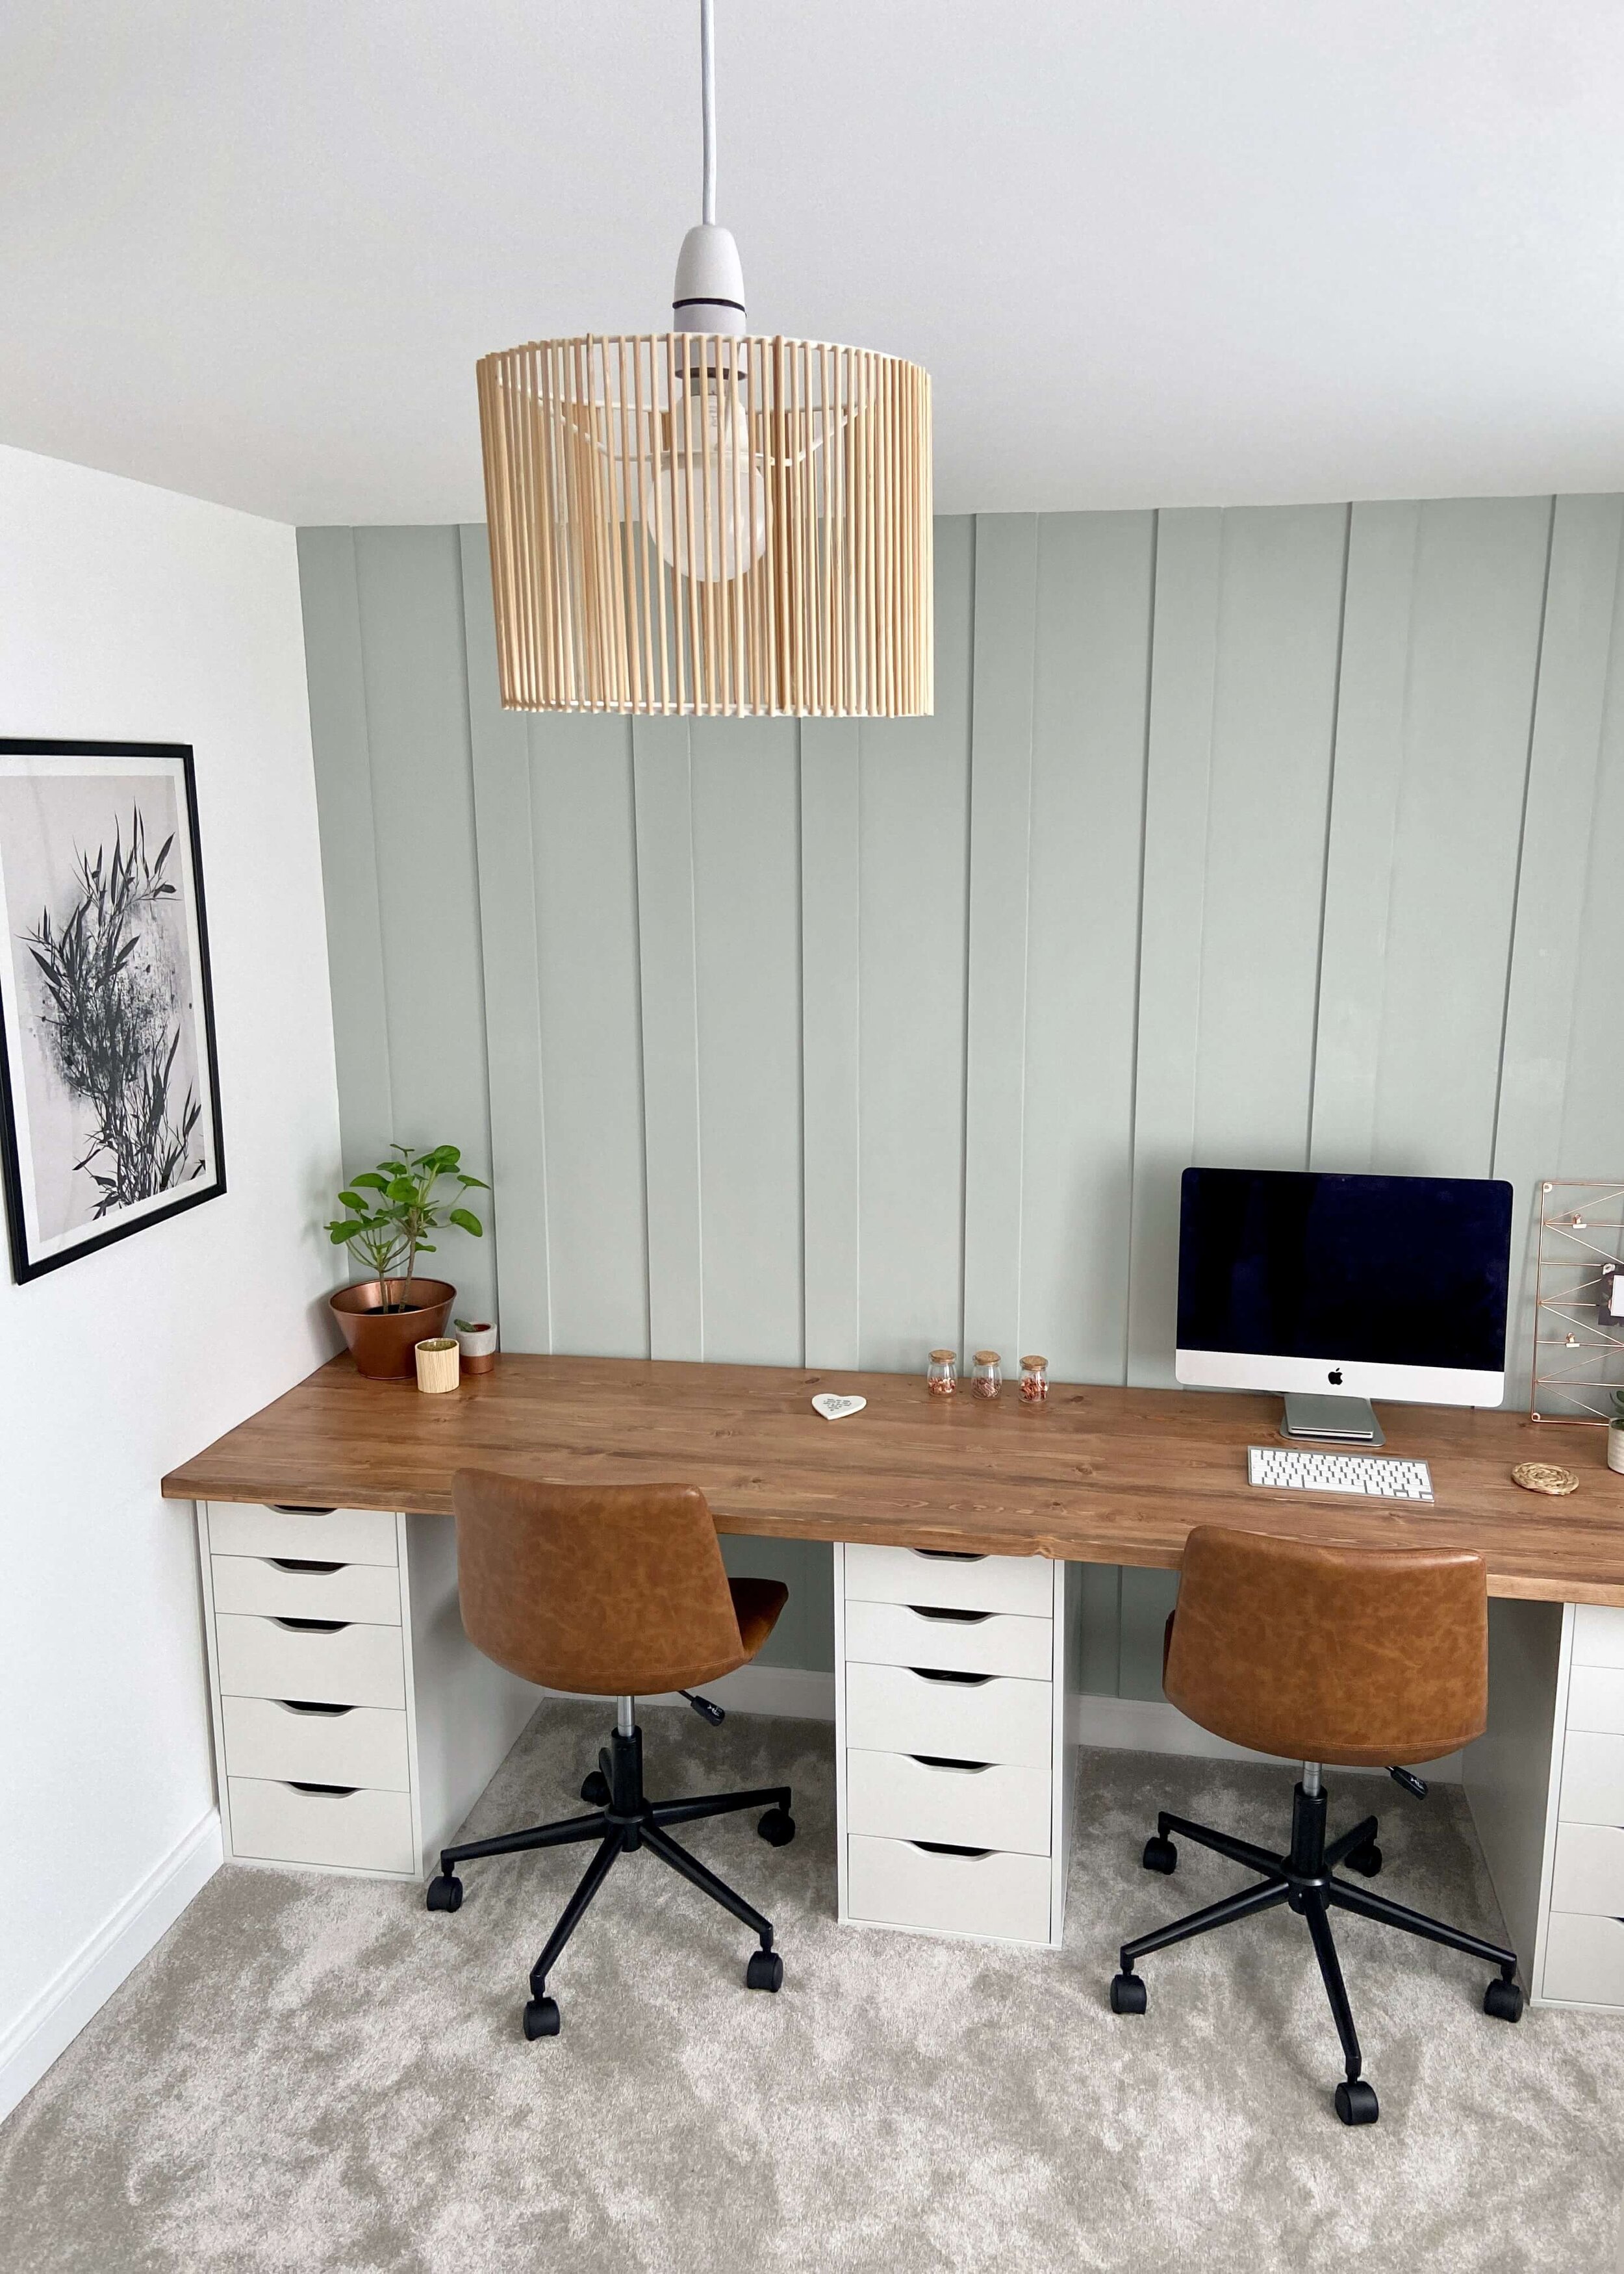 DIY Decor Reveal: The Office Space! — ISOSCELLA